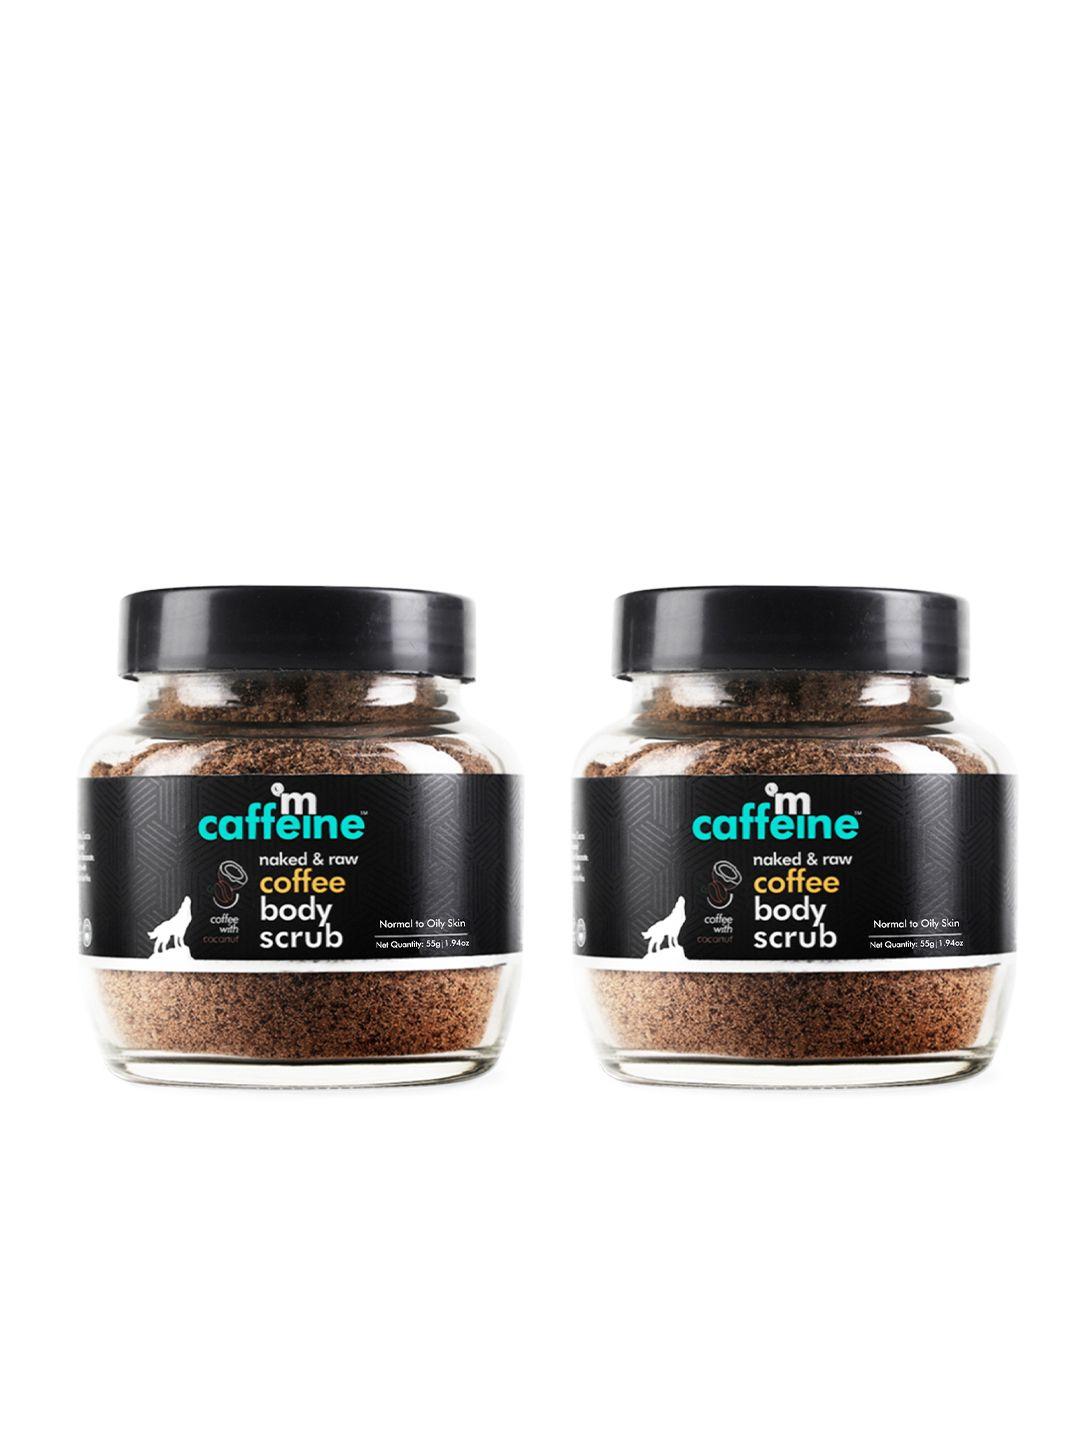 MCaffeine Set of 2 Exfoliating Coffee Body Scrub for Tan Removal - 55g each